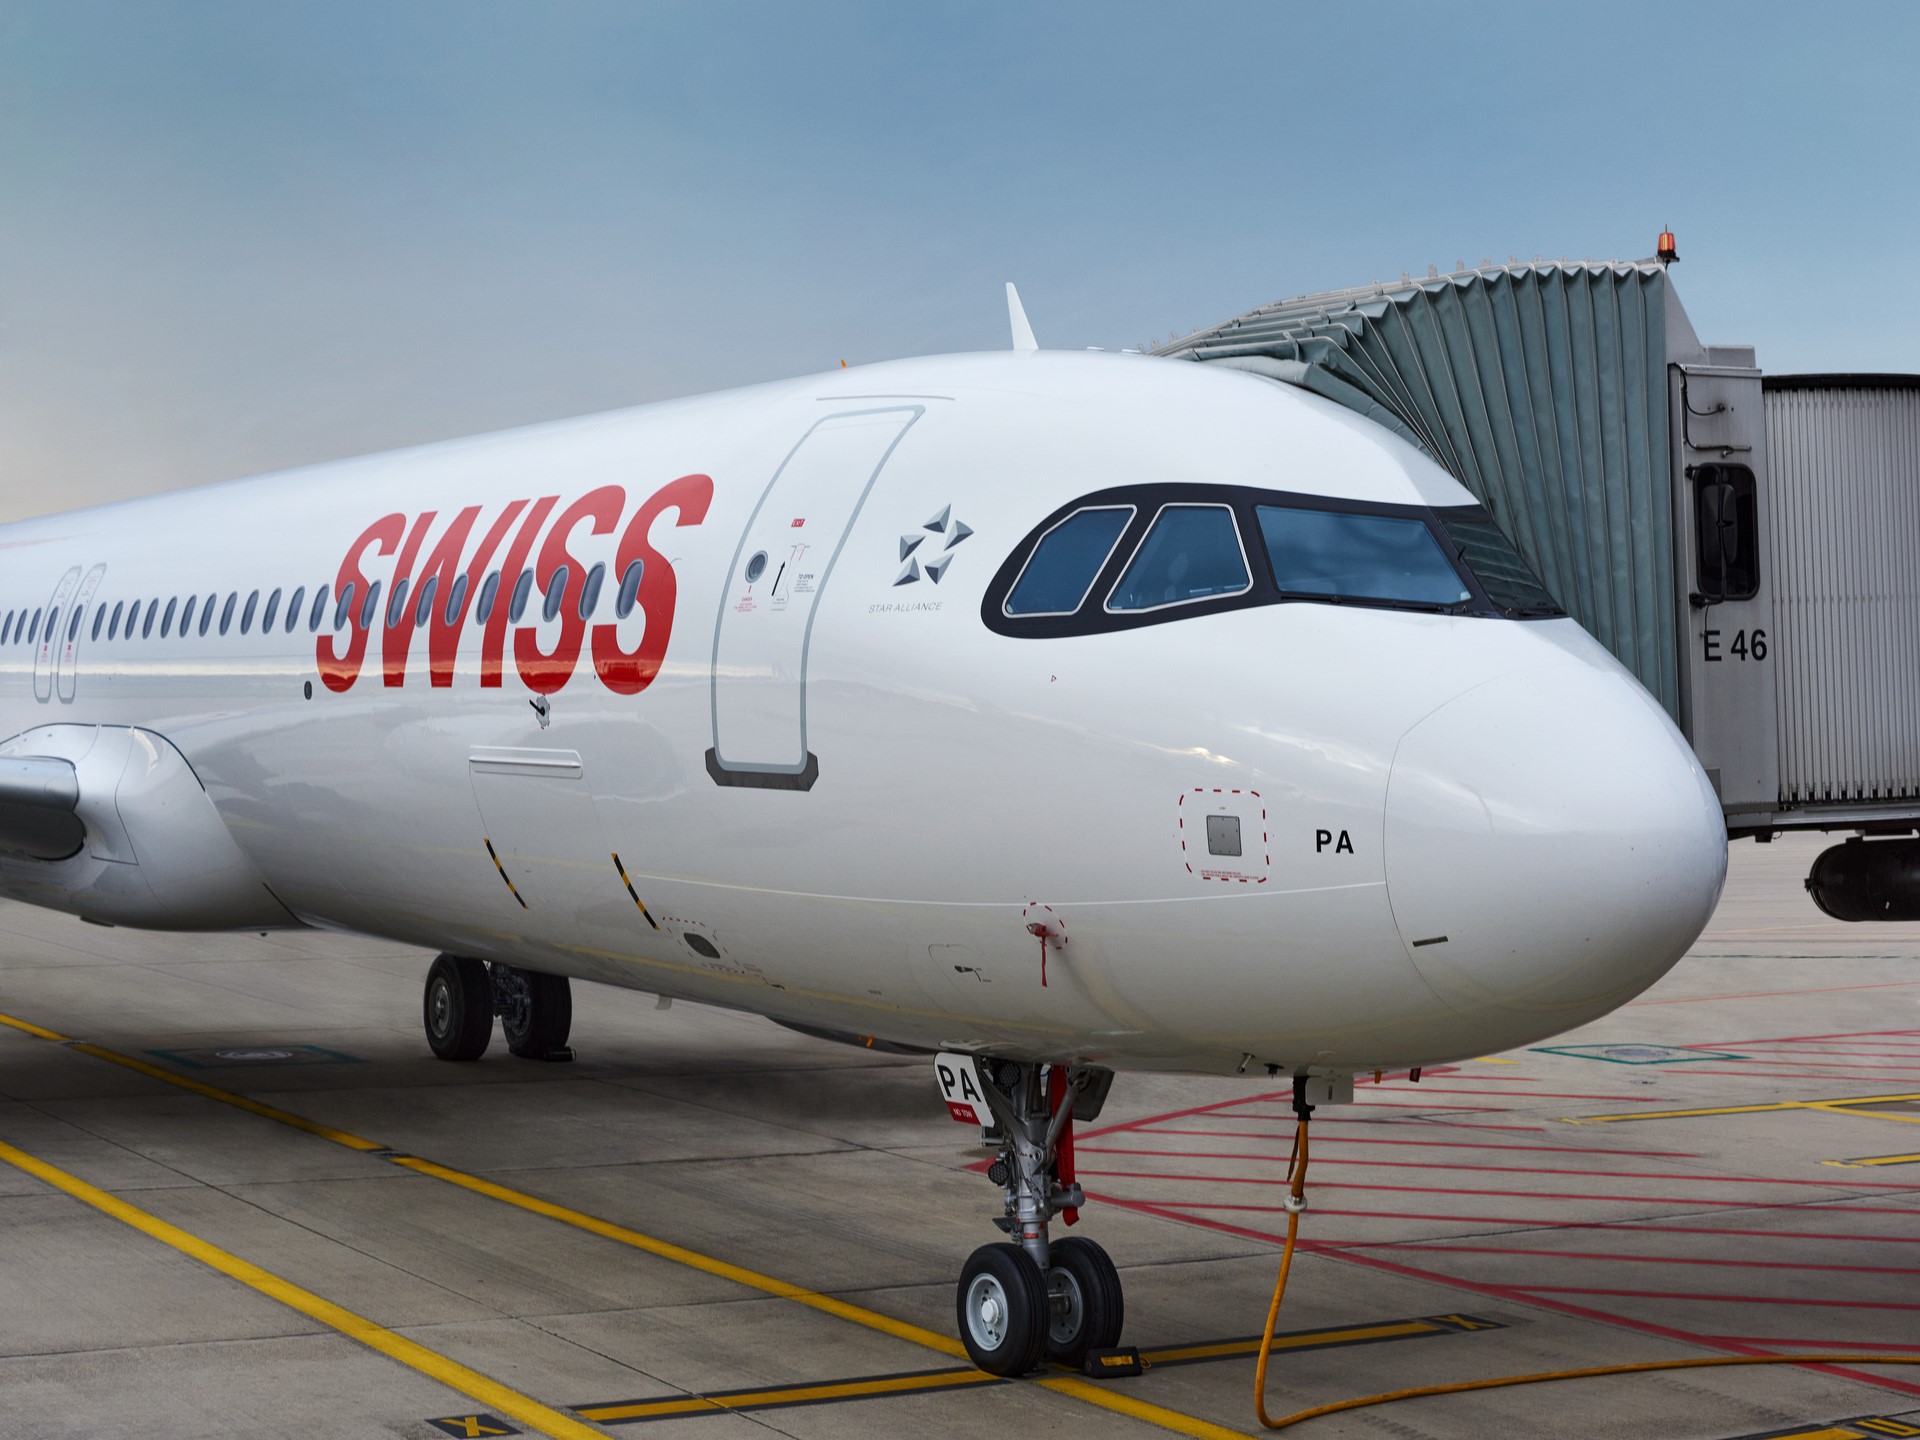 Airbus letecké společnosti Swiss International Air Lines. Foto: Swiss International Air Lines